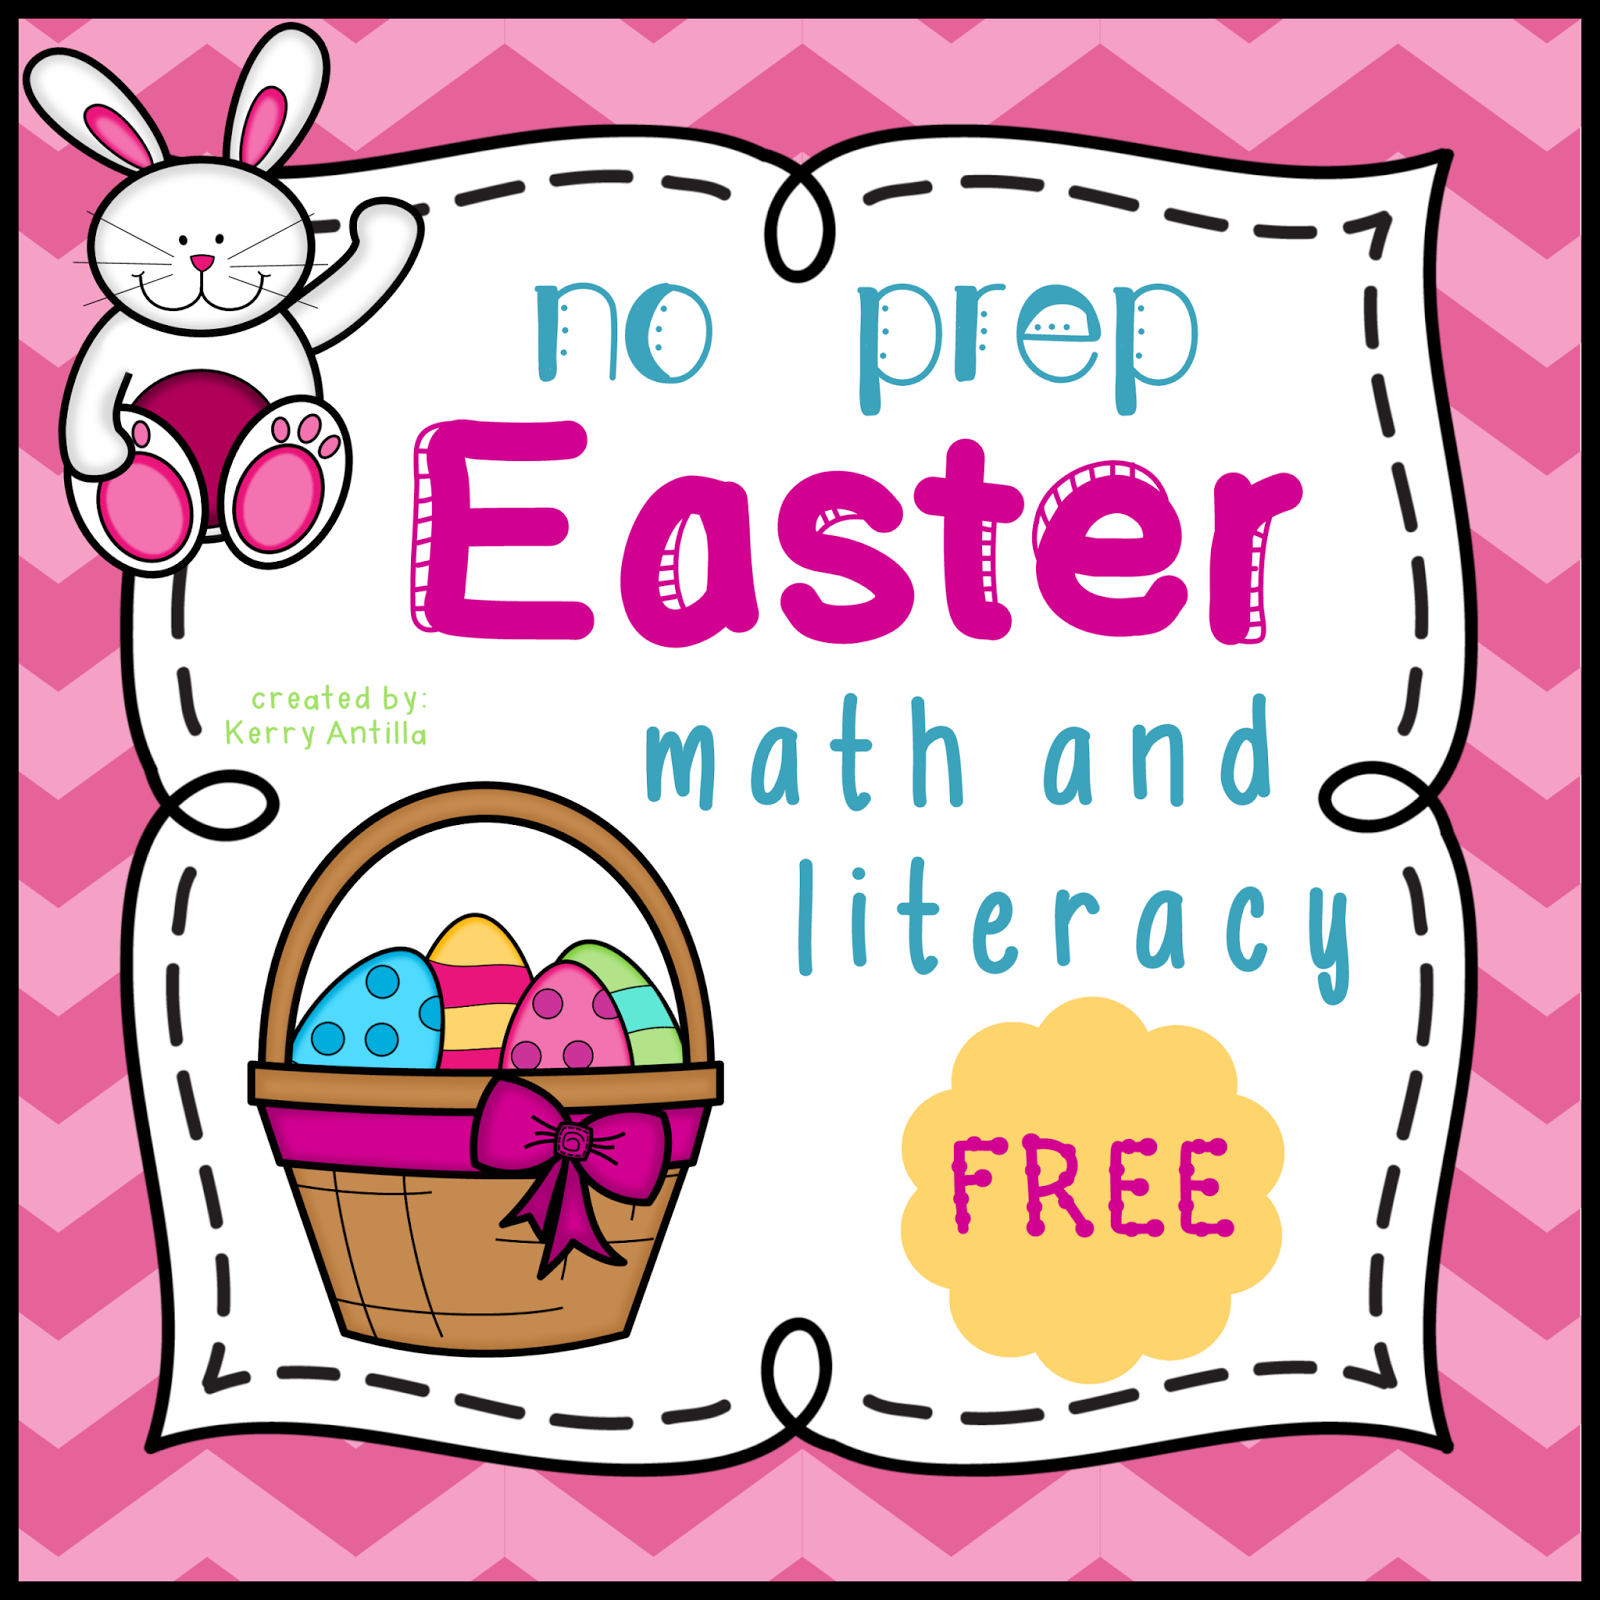 https://www.teacherspayteachers.com/Product/FREE-No-Prep-Easter-Math-and-Literacy-Pack-1207499